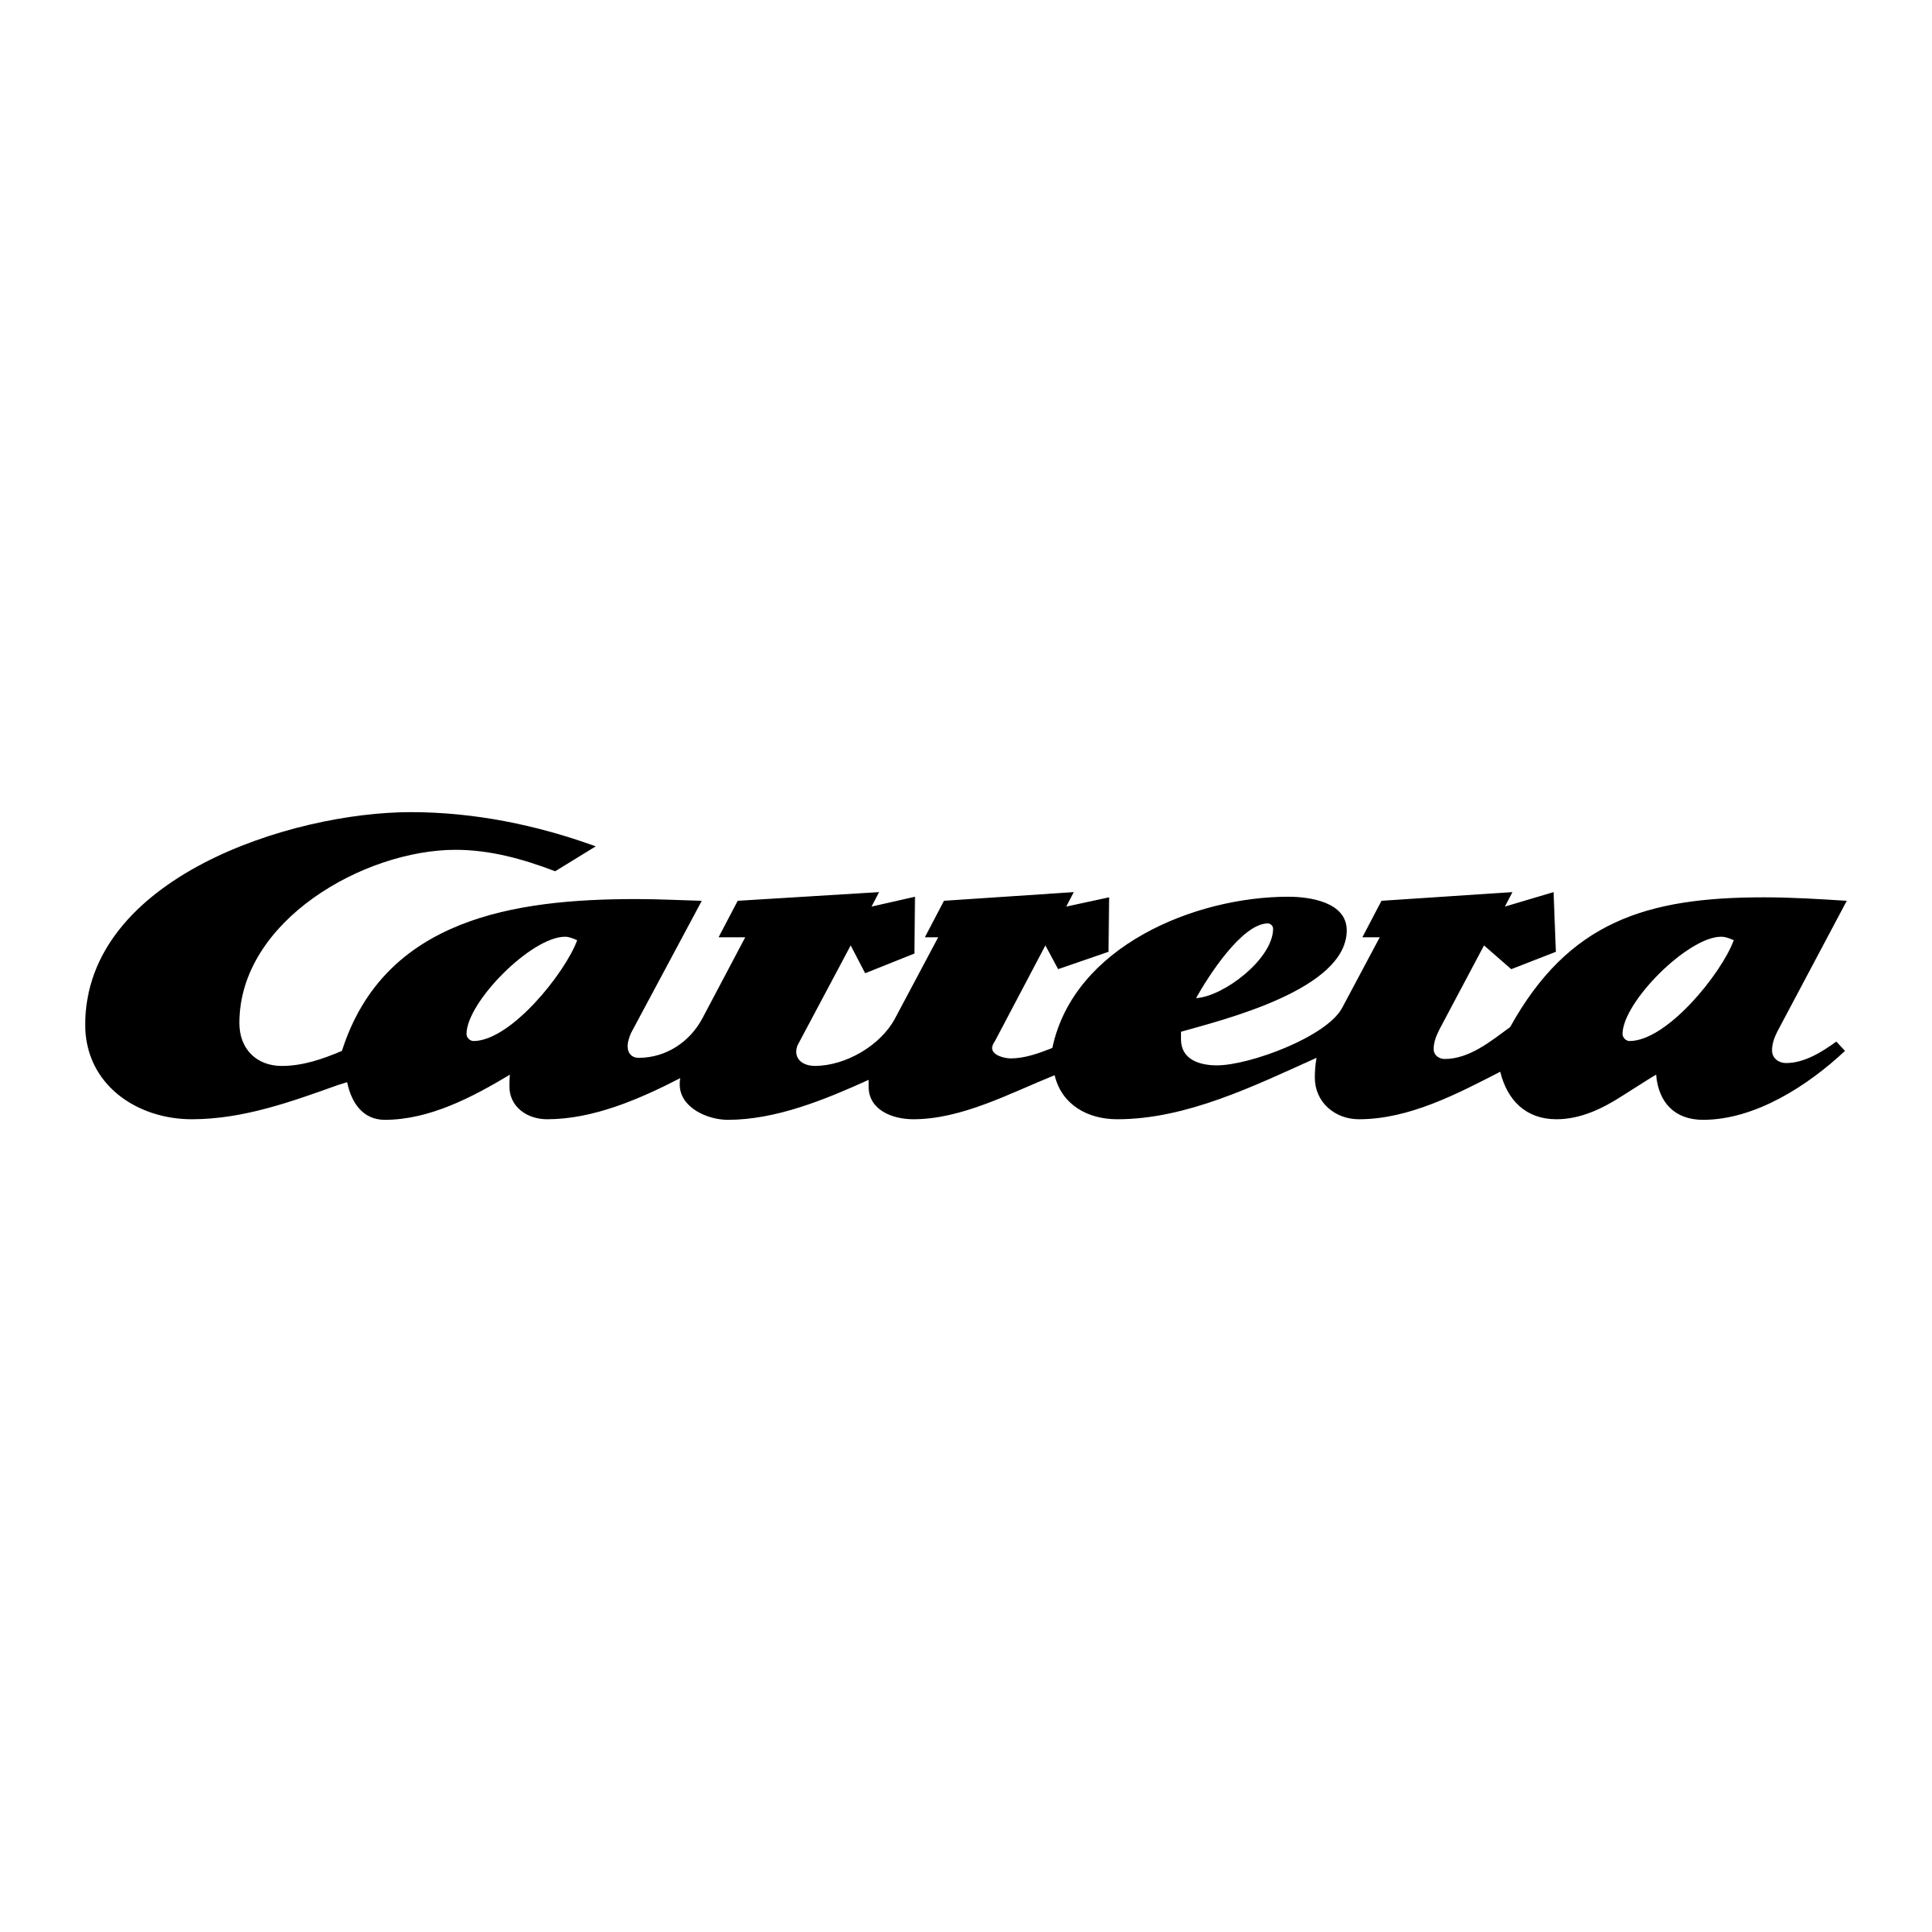 carrera-1-logo-png-transparent